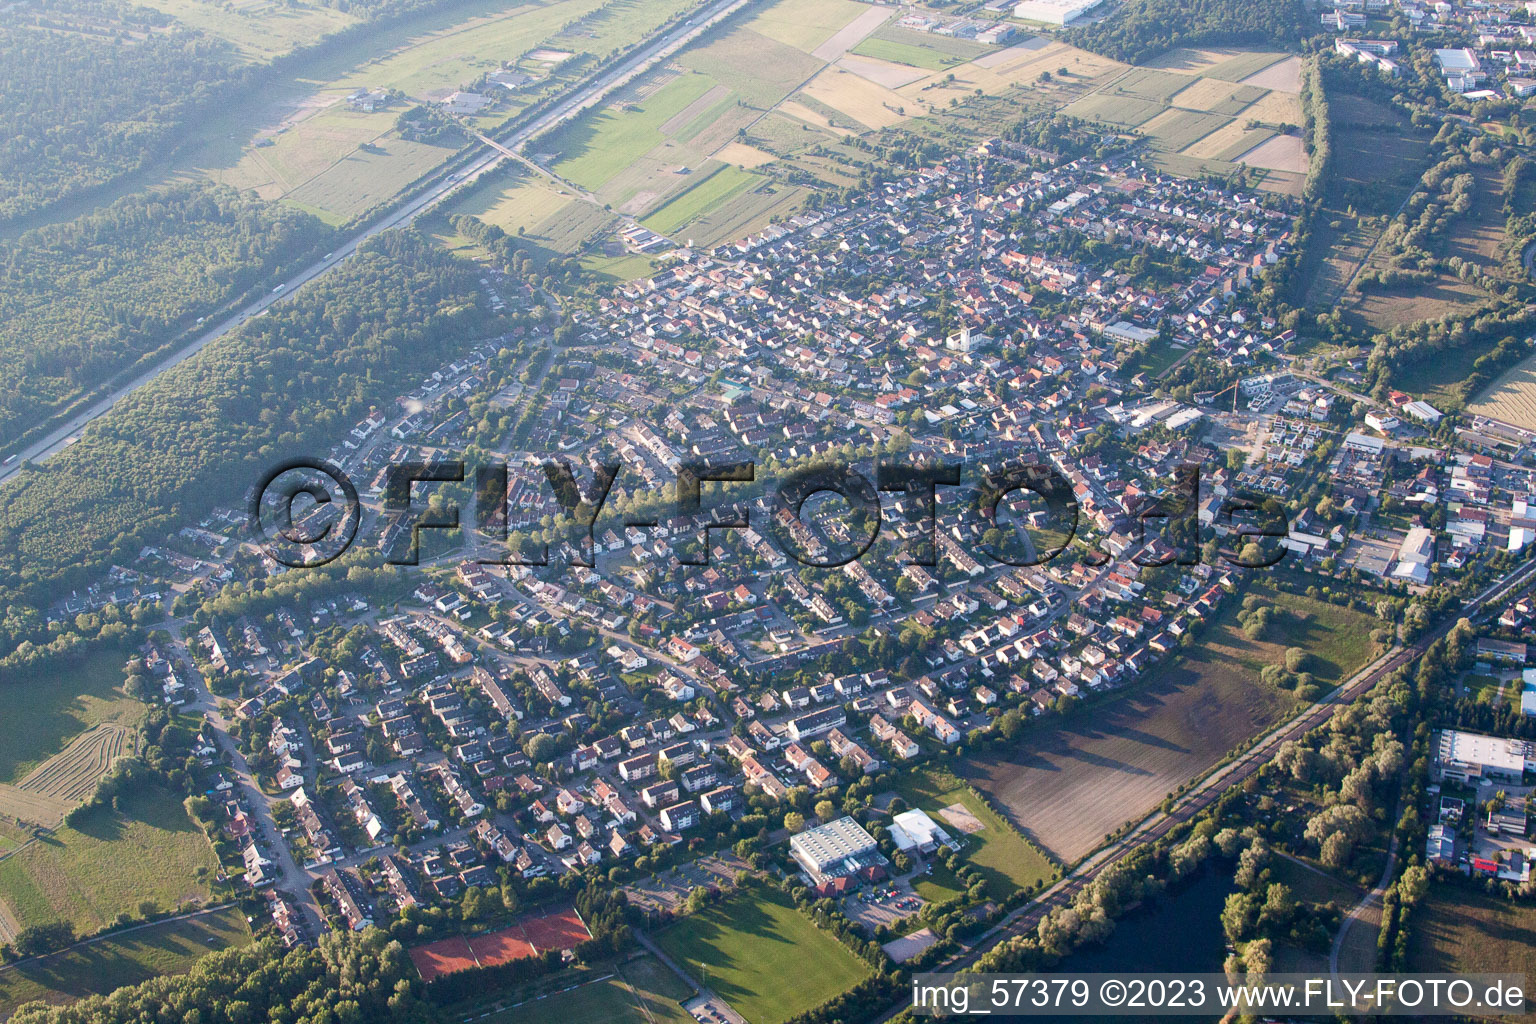 District Bruchhausen in Ettlingen in the state Baden-Wuerttemberg, Germany from the plane